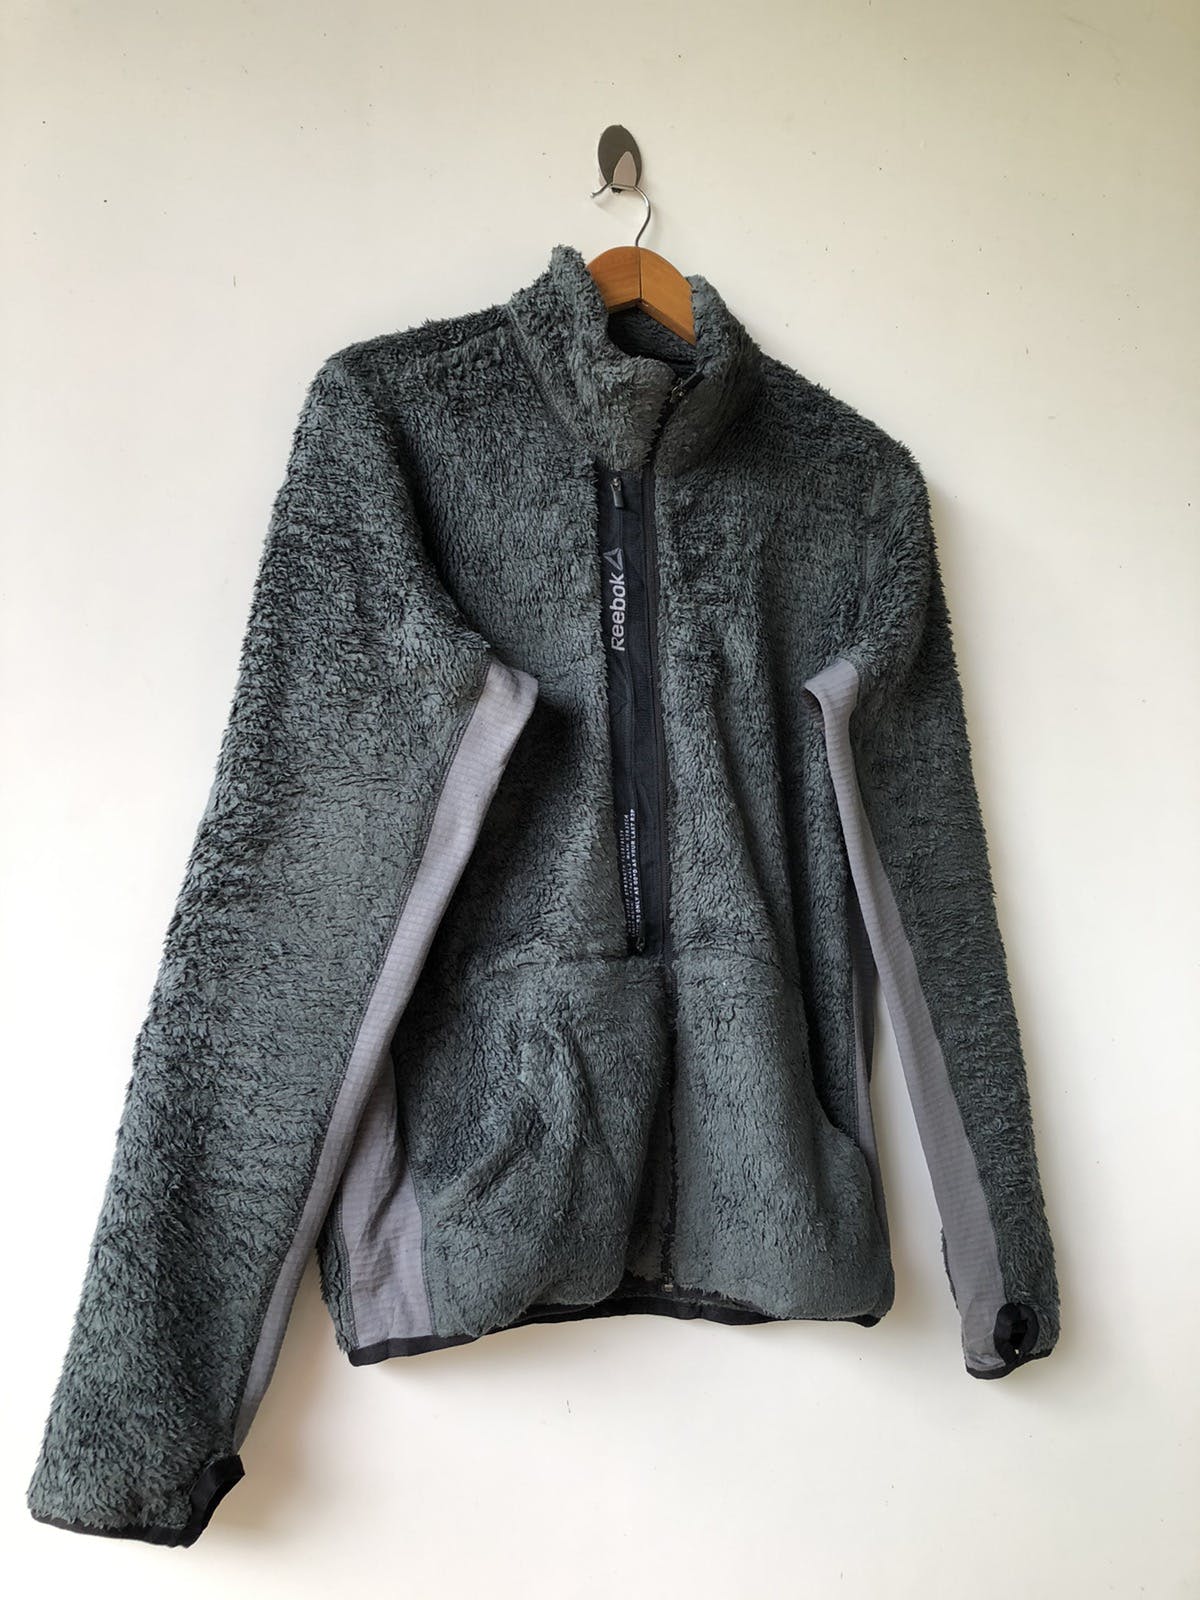 Vintage Reebok fleece Pullover jackets - 2